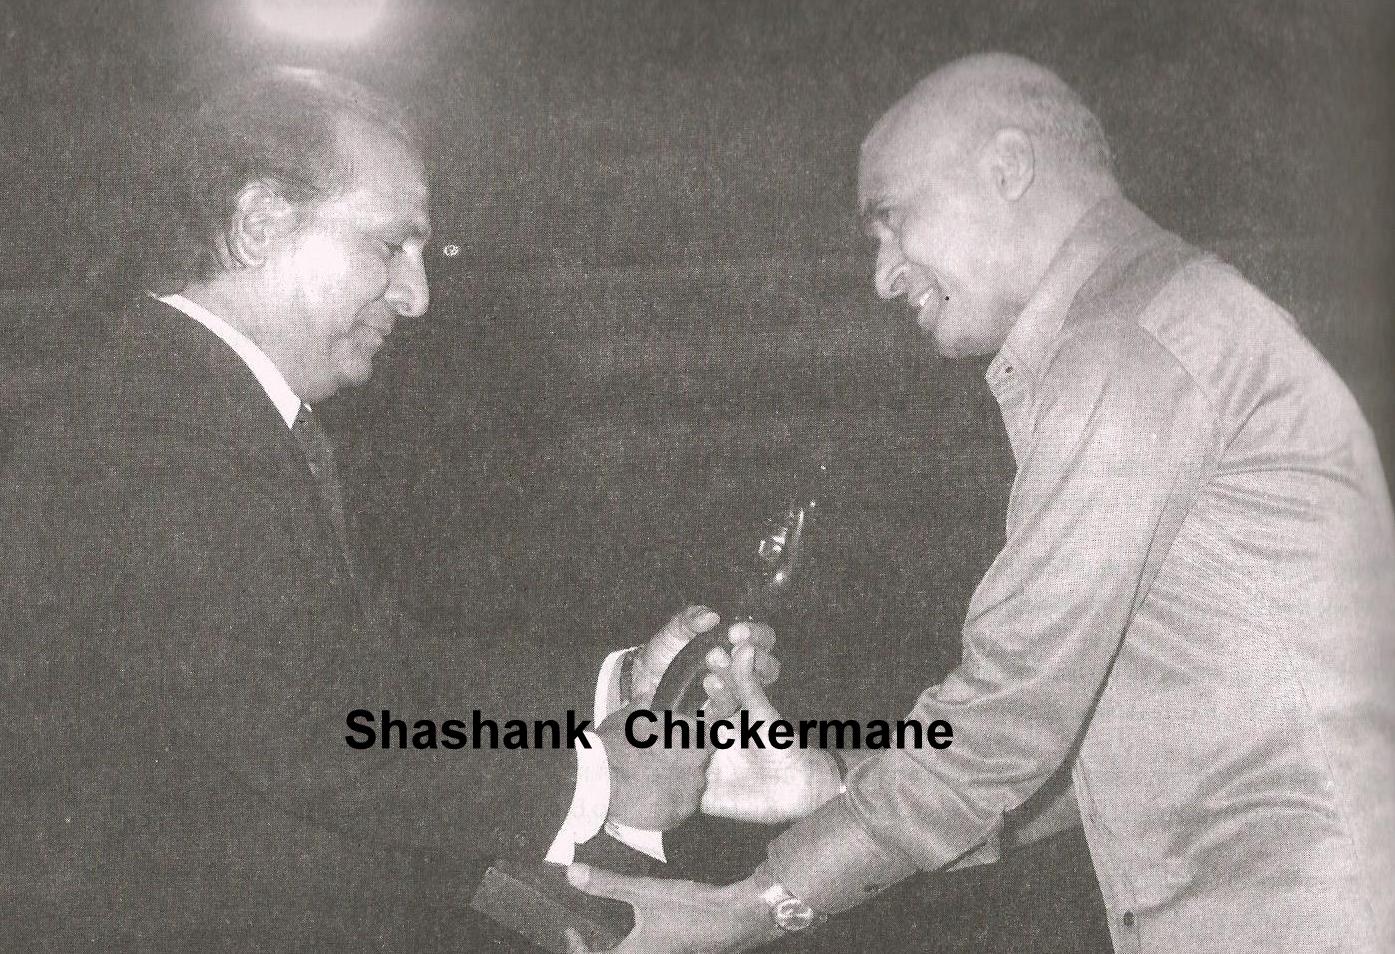 Khayyam receiving award from Shankar in the function